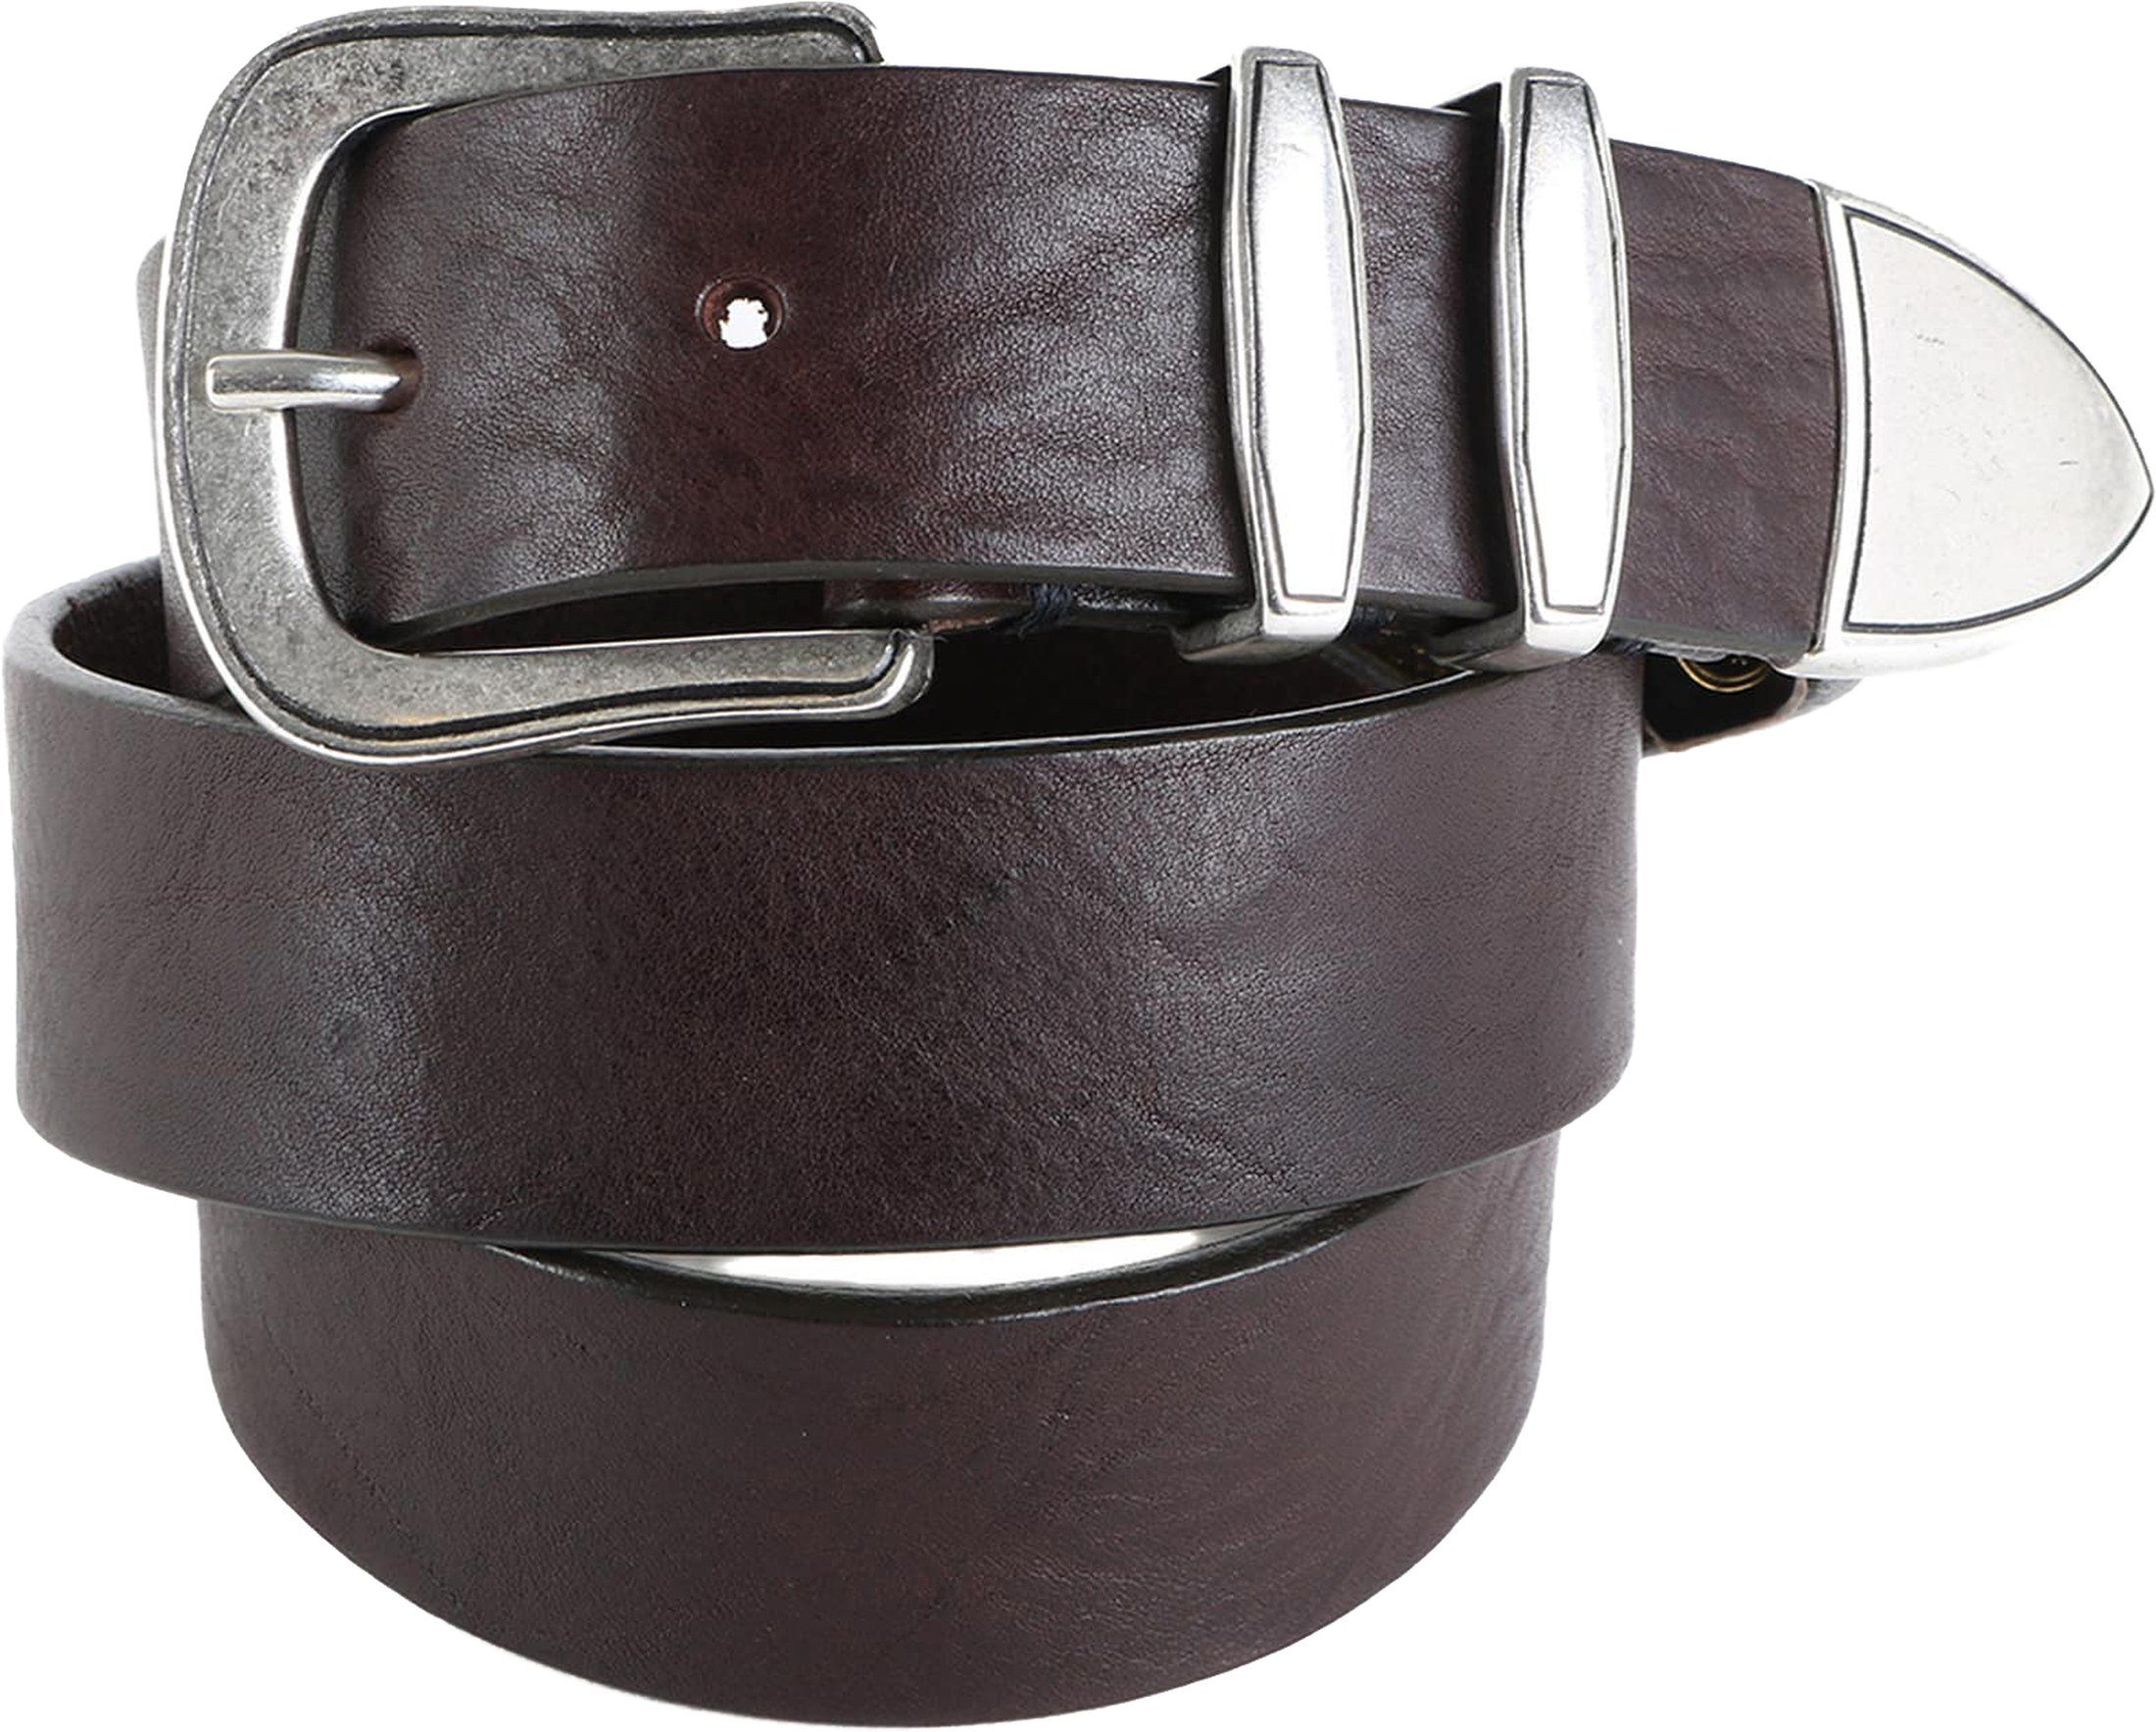 Profuomo Leather Belt Paris Brown size 33.5